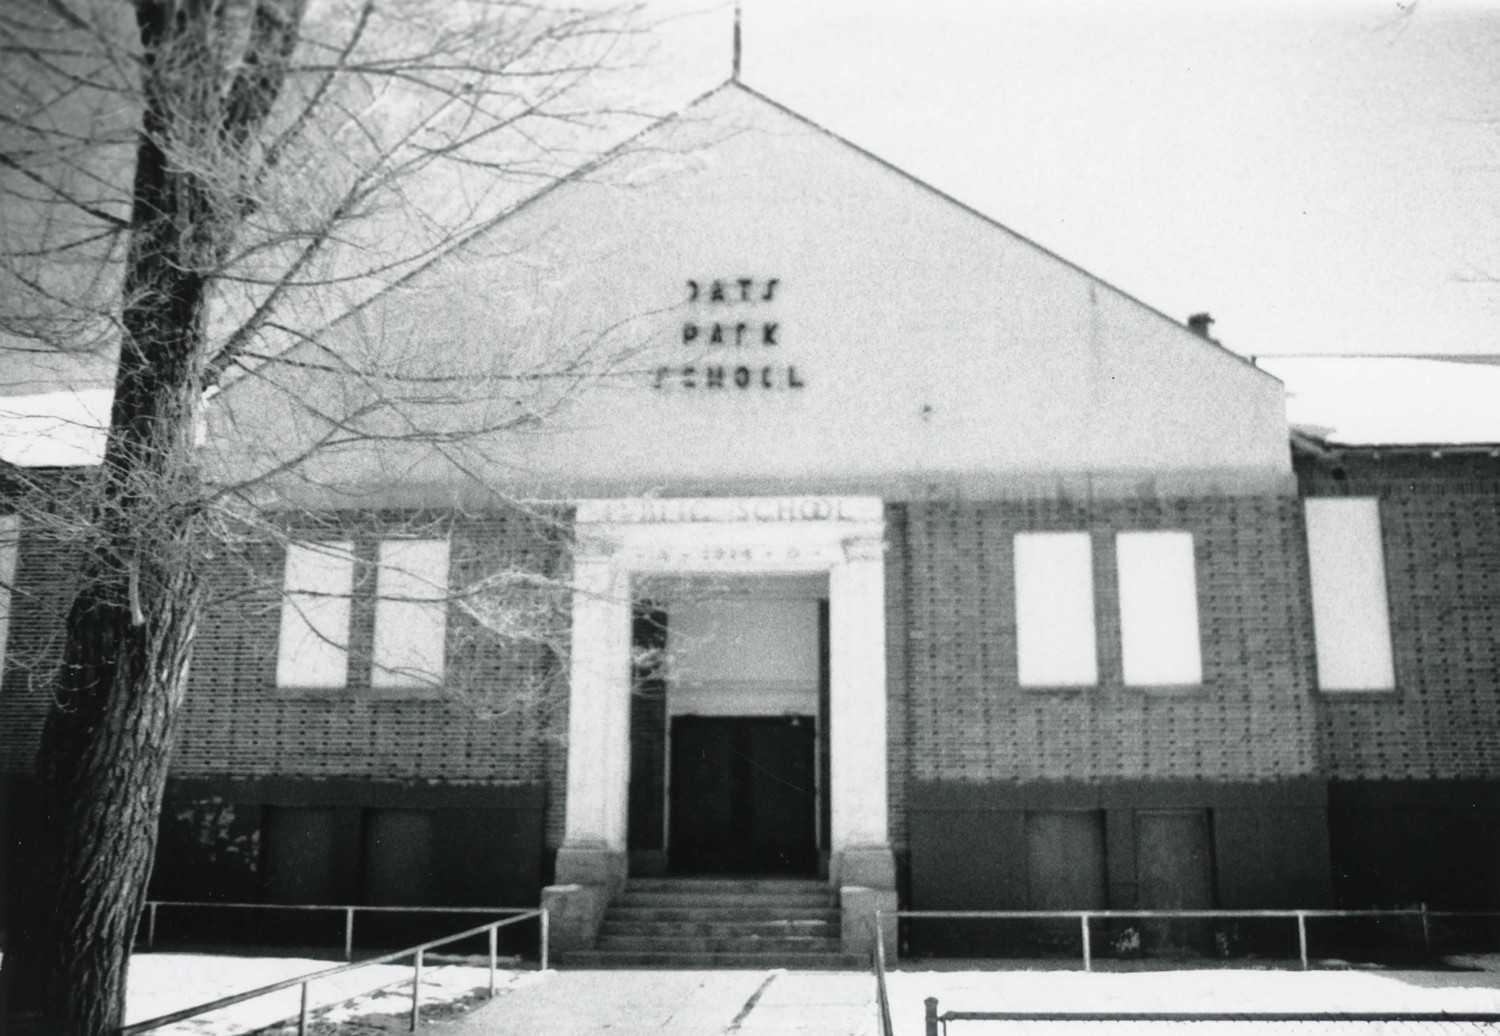 Oats Park Grammar School, Fallon Nevada Front entrance (1990)